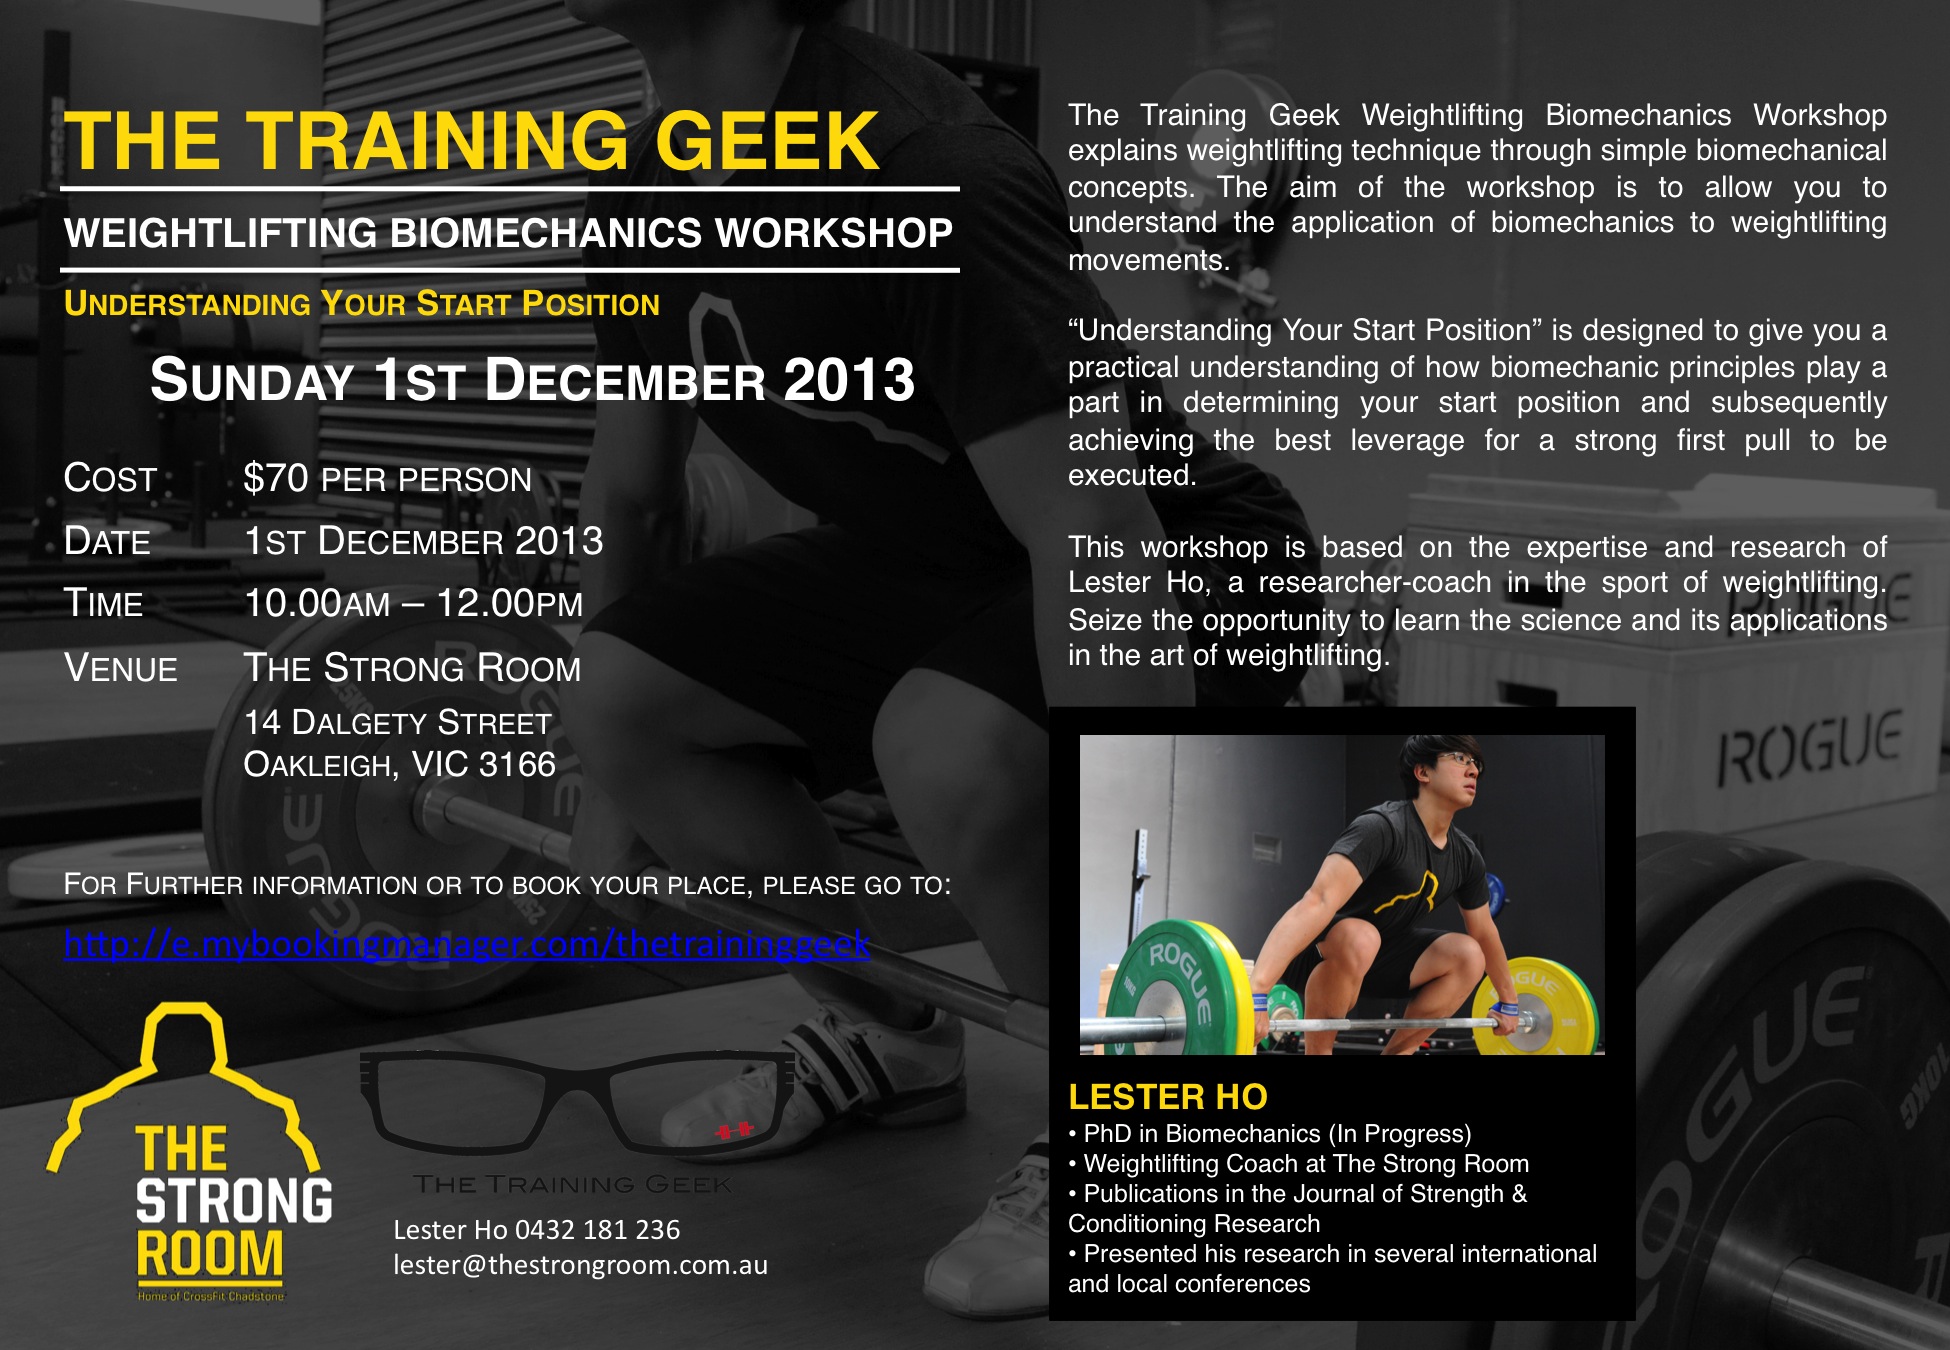 The Training Geek Weightlifting Biomechanics Workshop